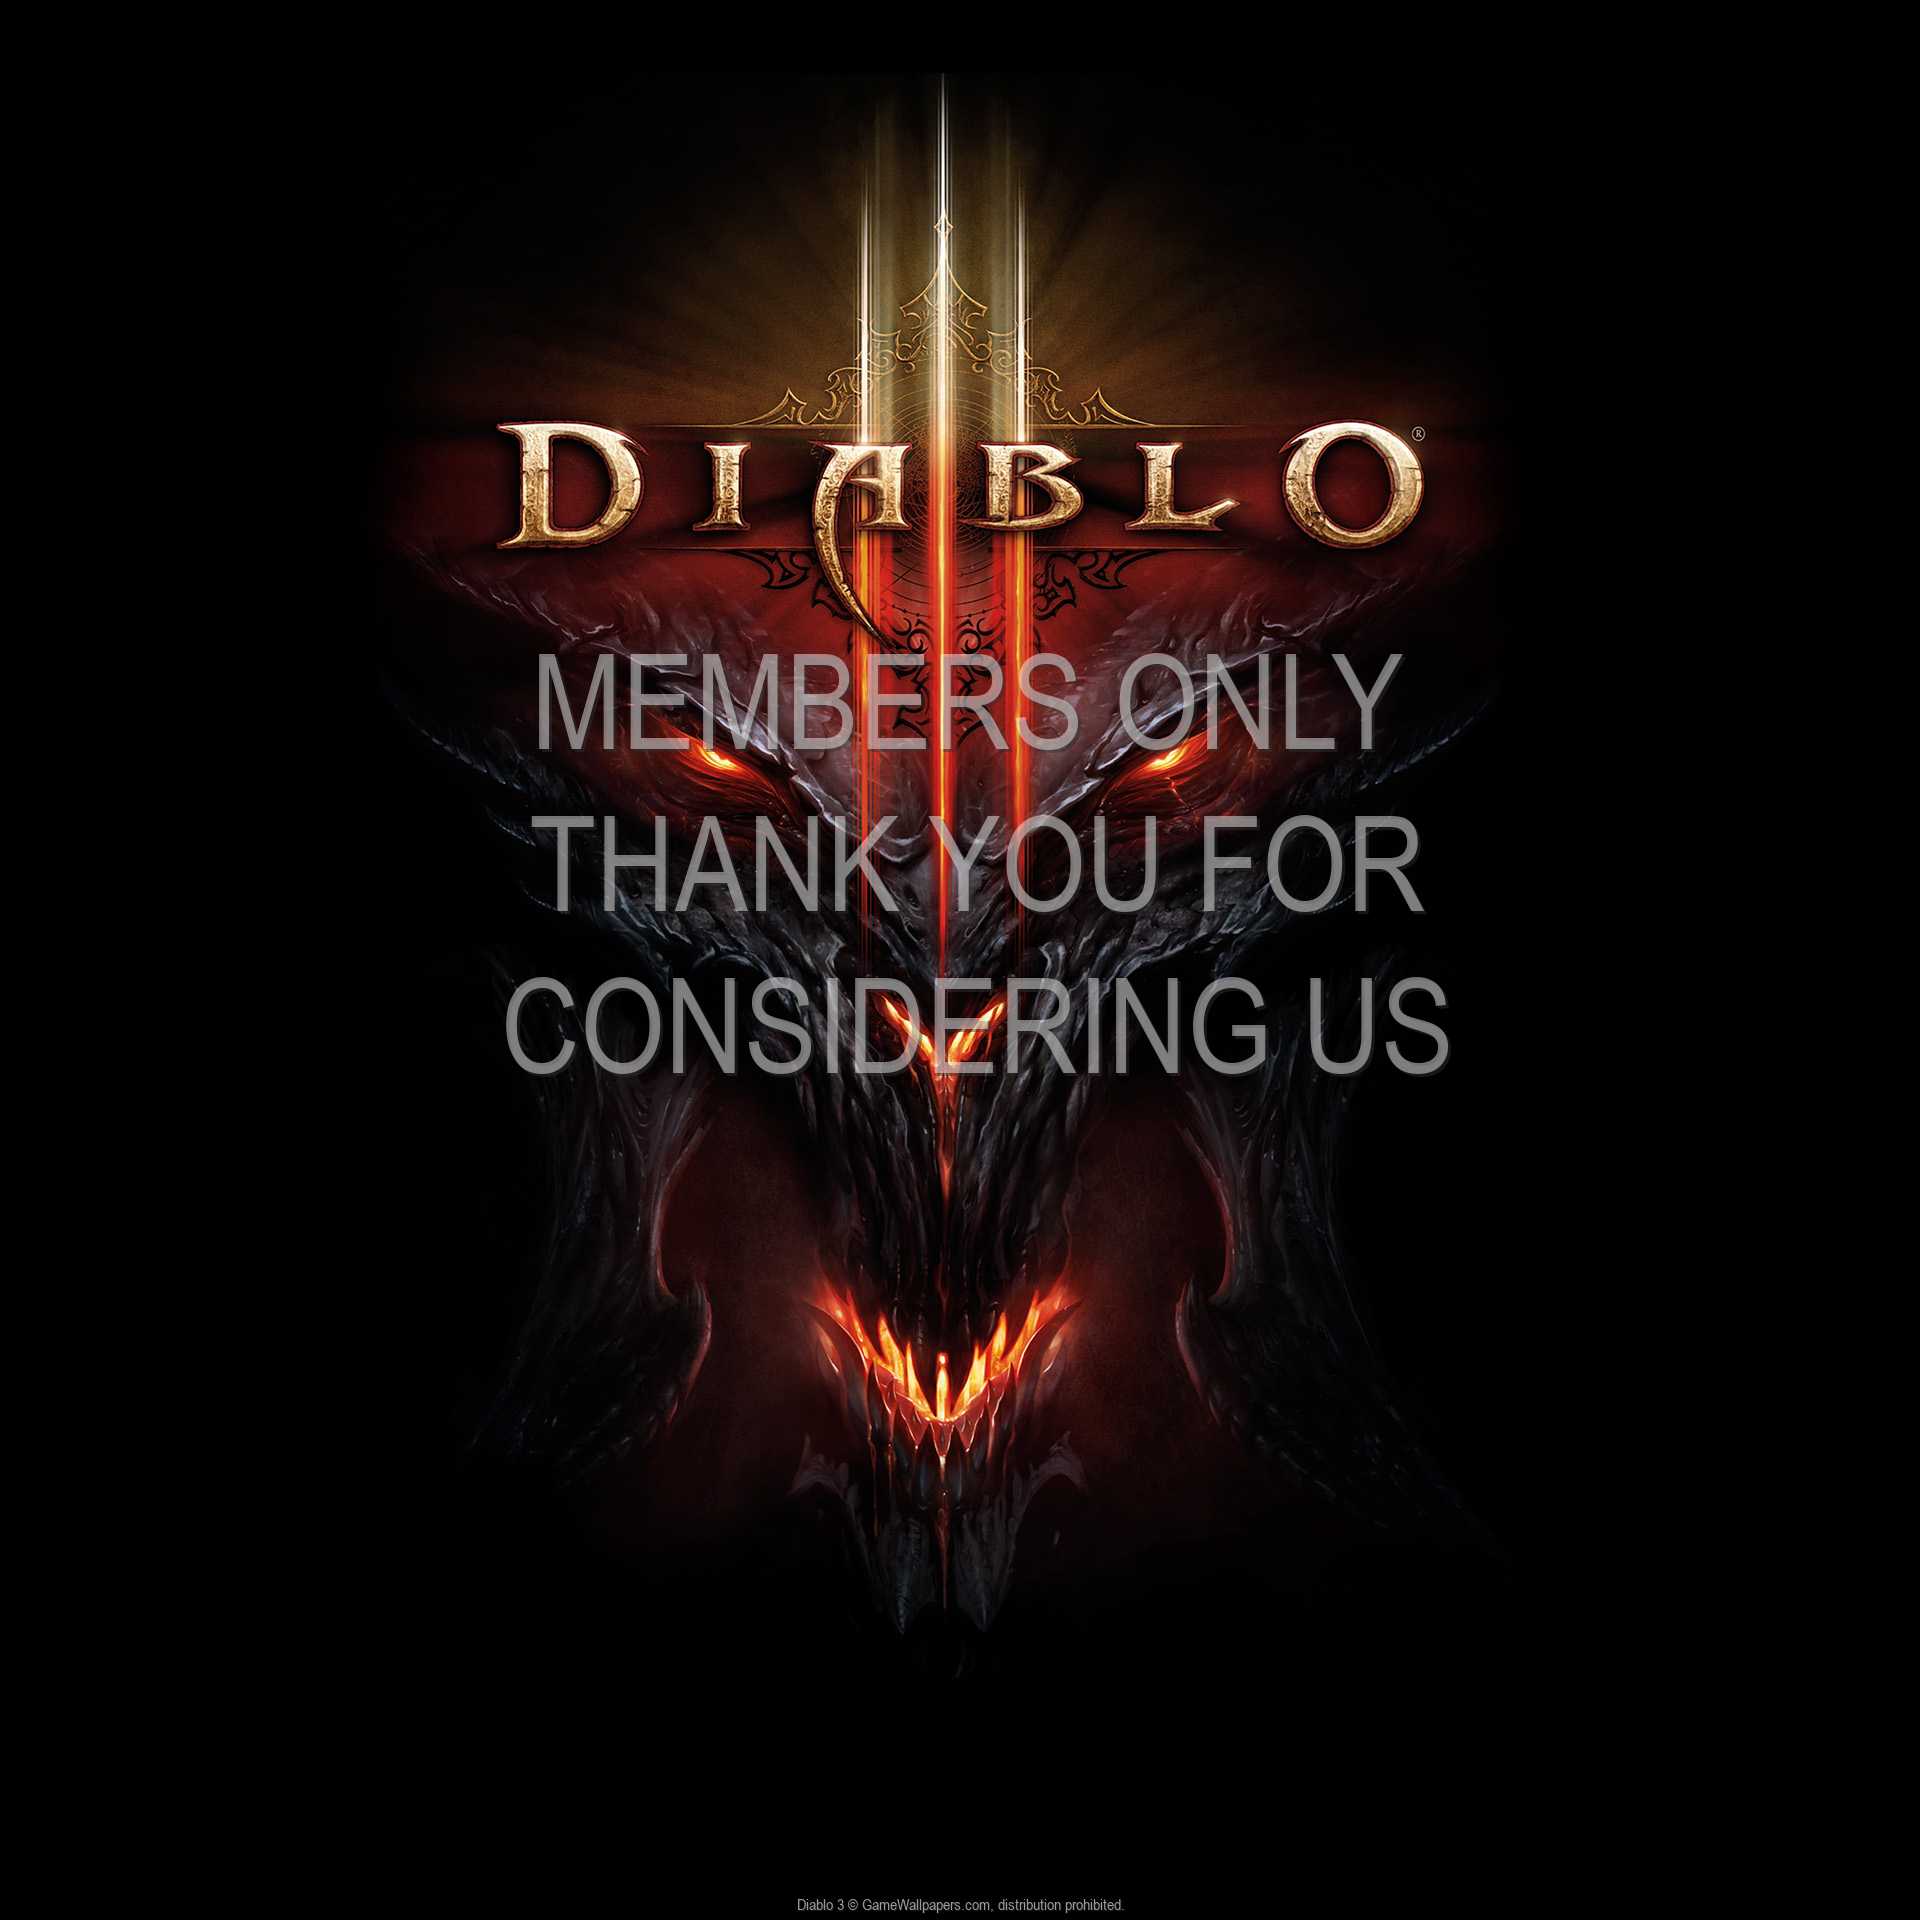 Diablo 3 1080p Horizontal Mobile wallpaper or background 18